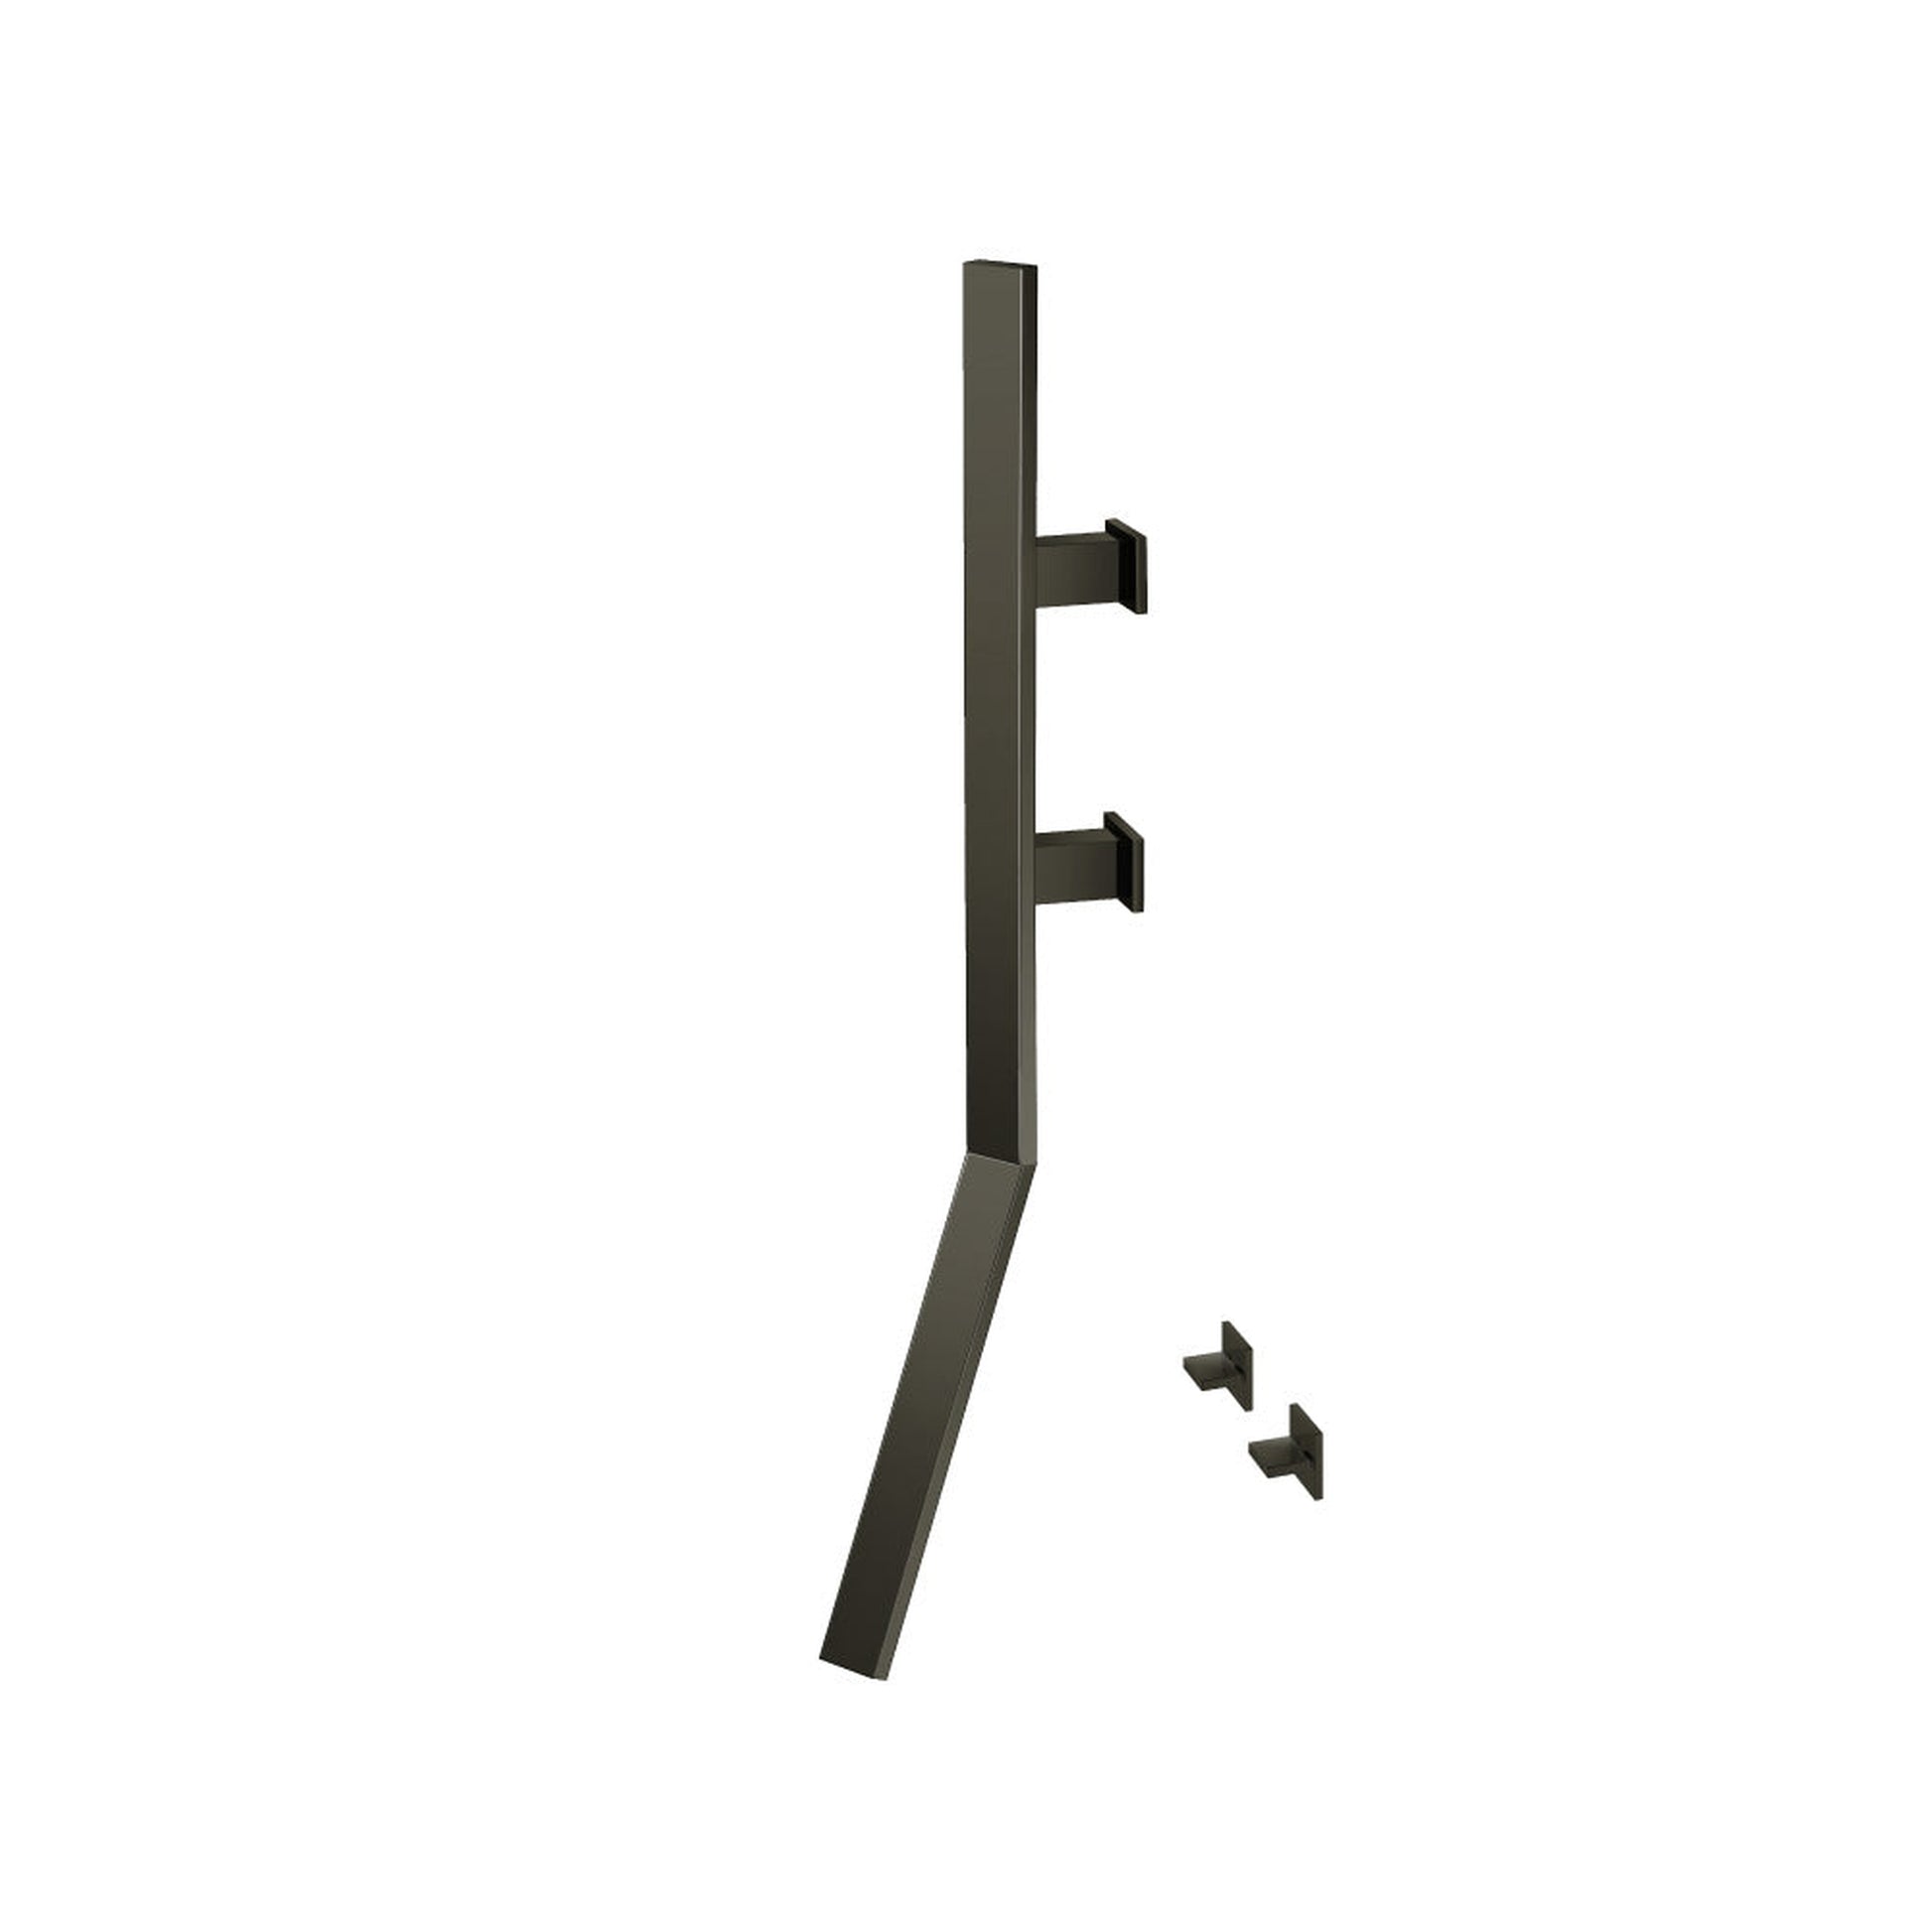 Isenberg Infinity Wall Mount Faucet With Handles in Gun Metal Grey